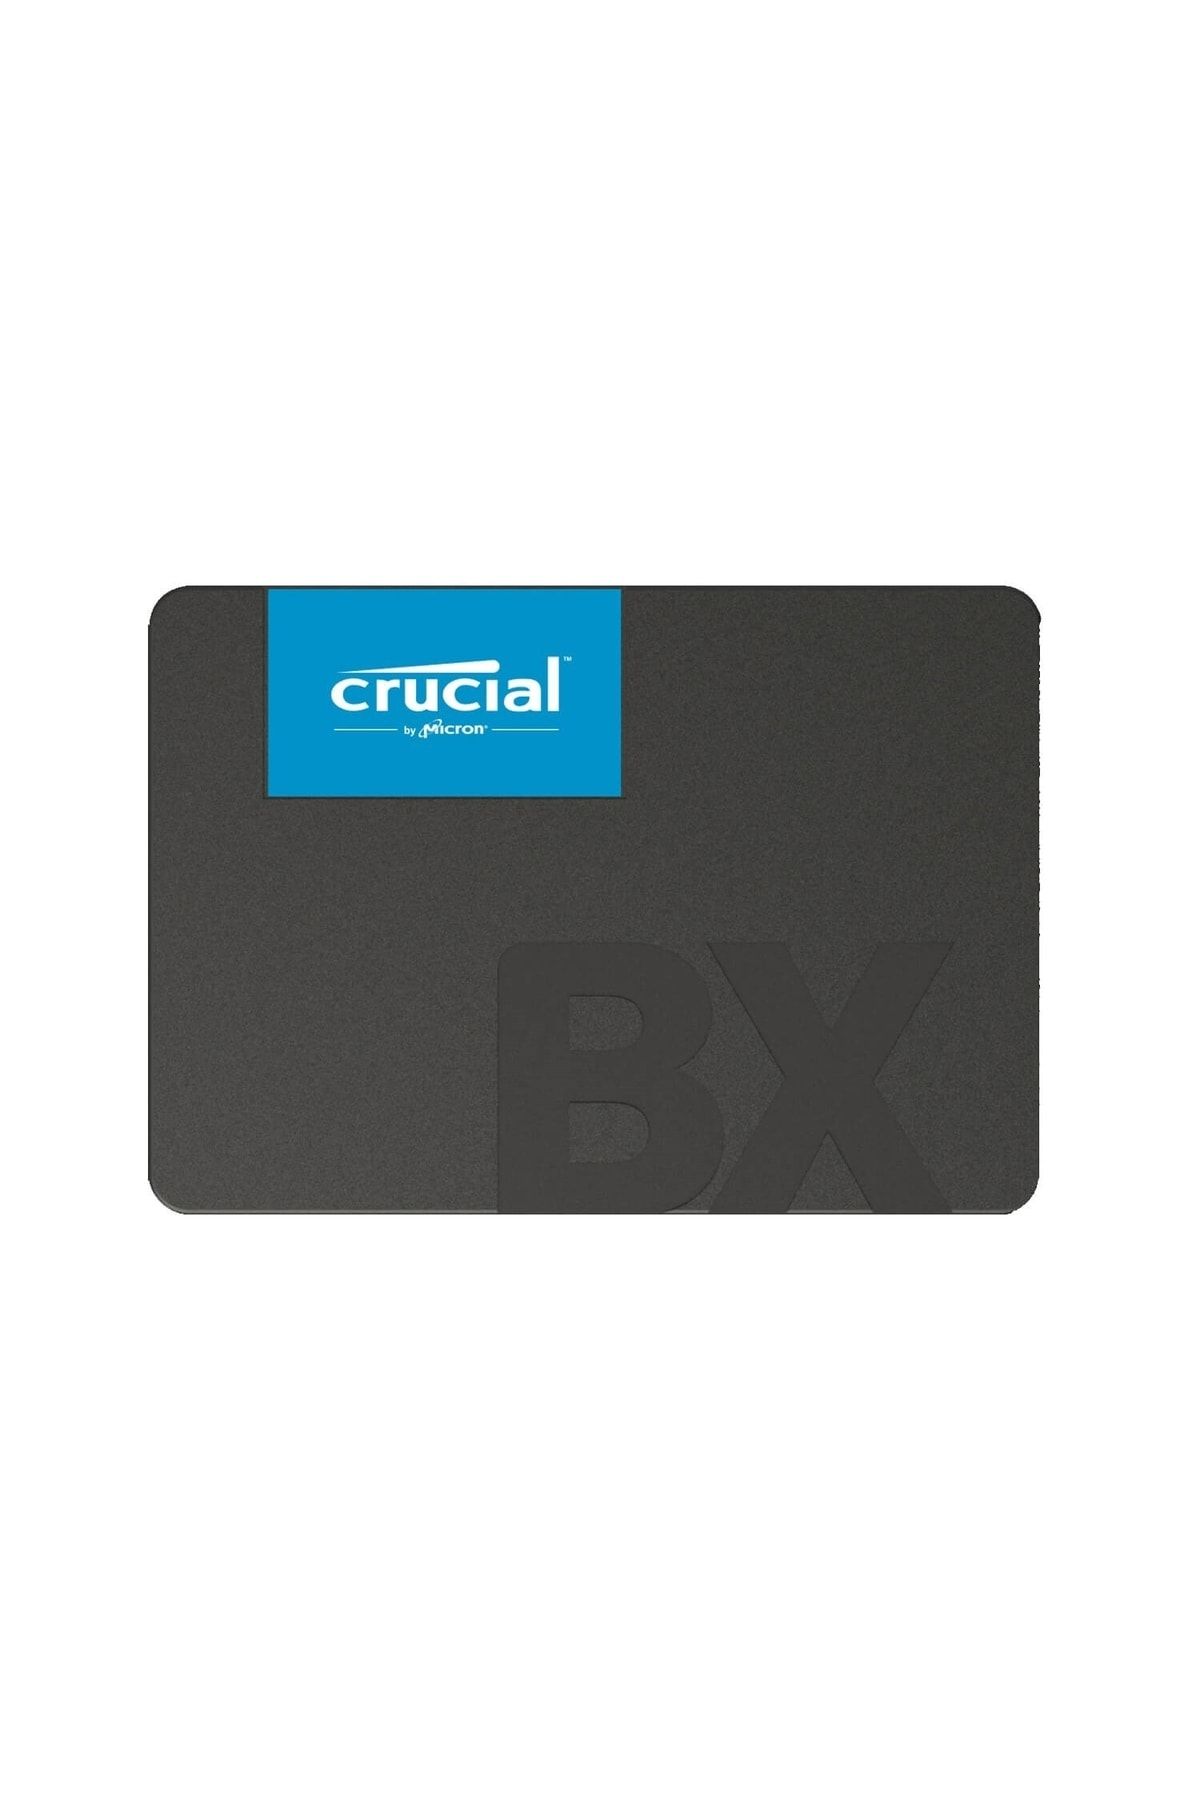 Crucial Bx500 480gb 3dnand Ssd Disk (540 Mb Okuma / 500 Mb Yazma)